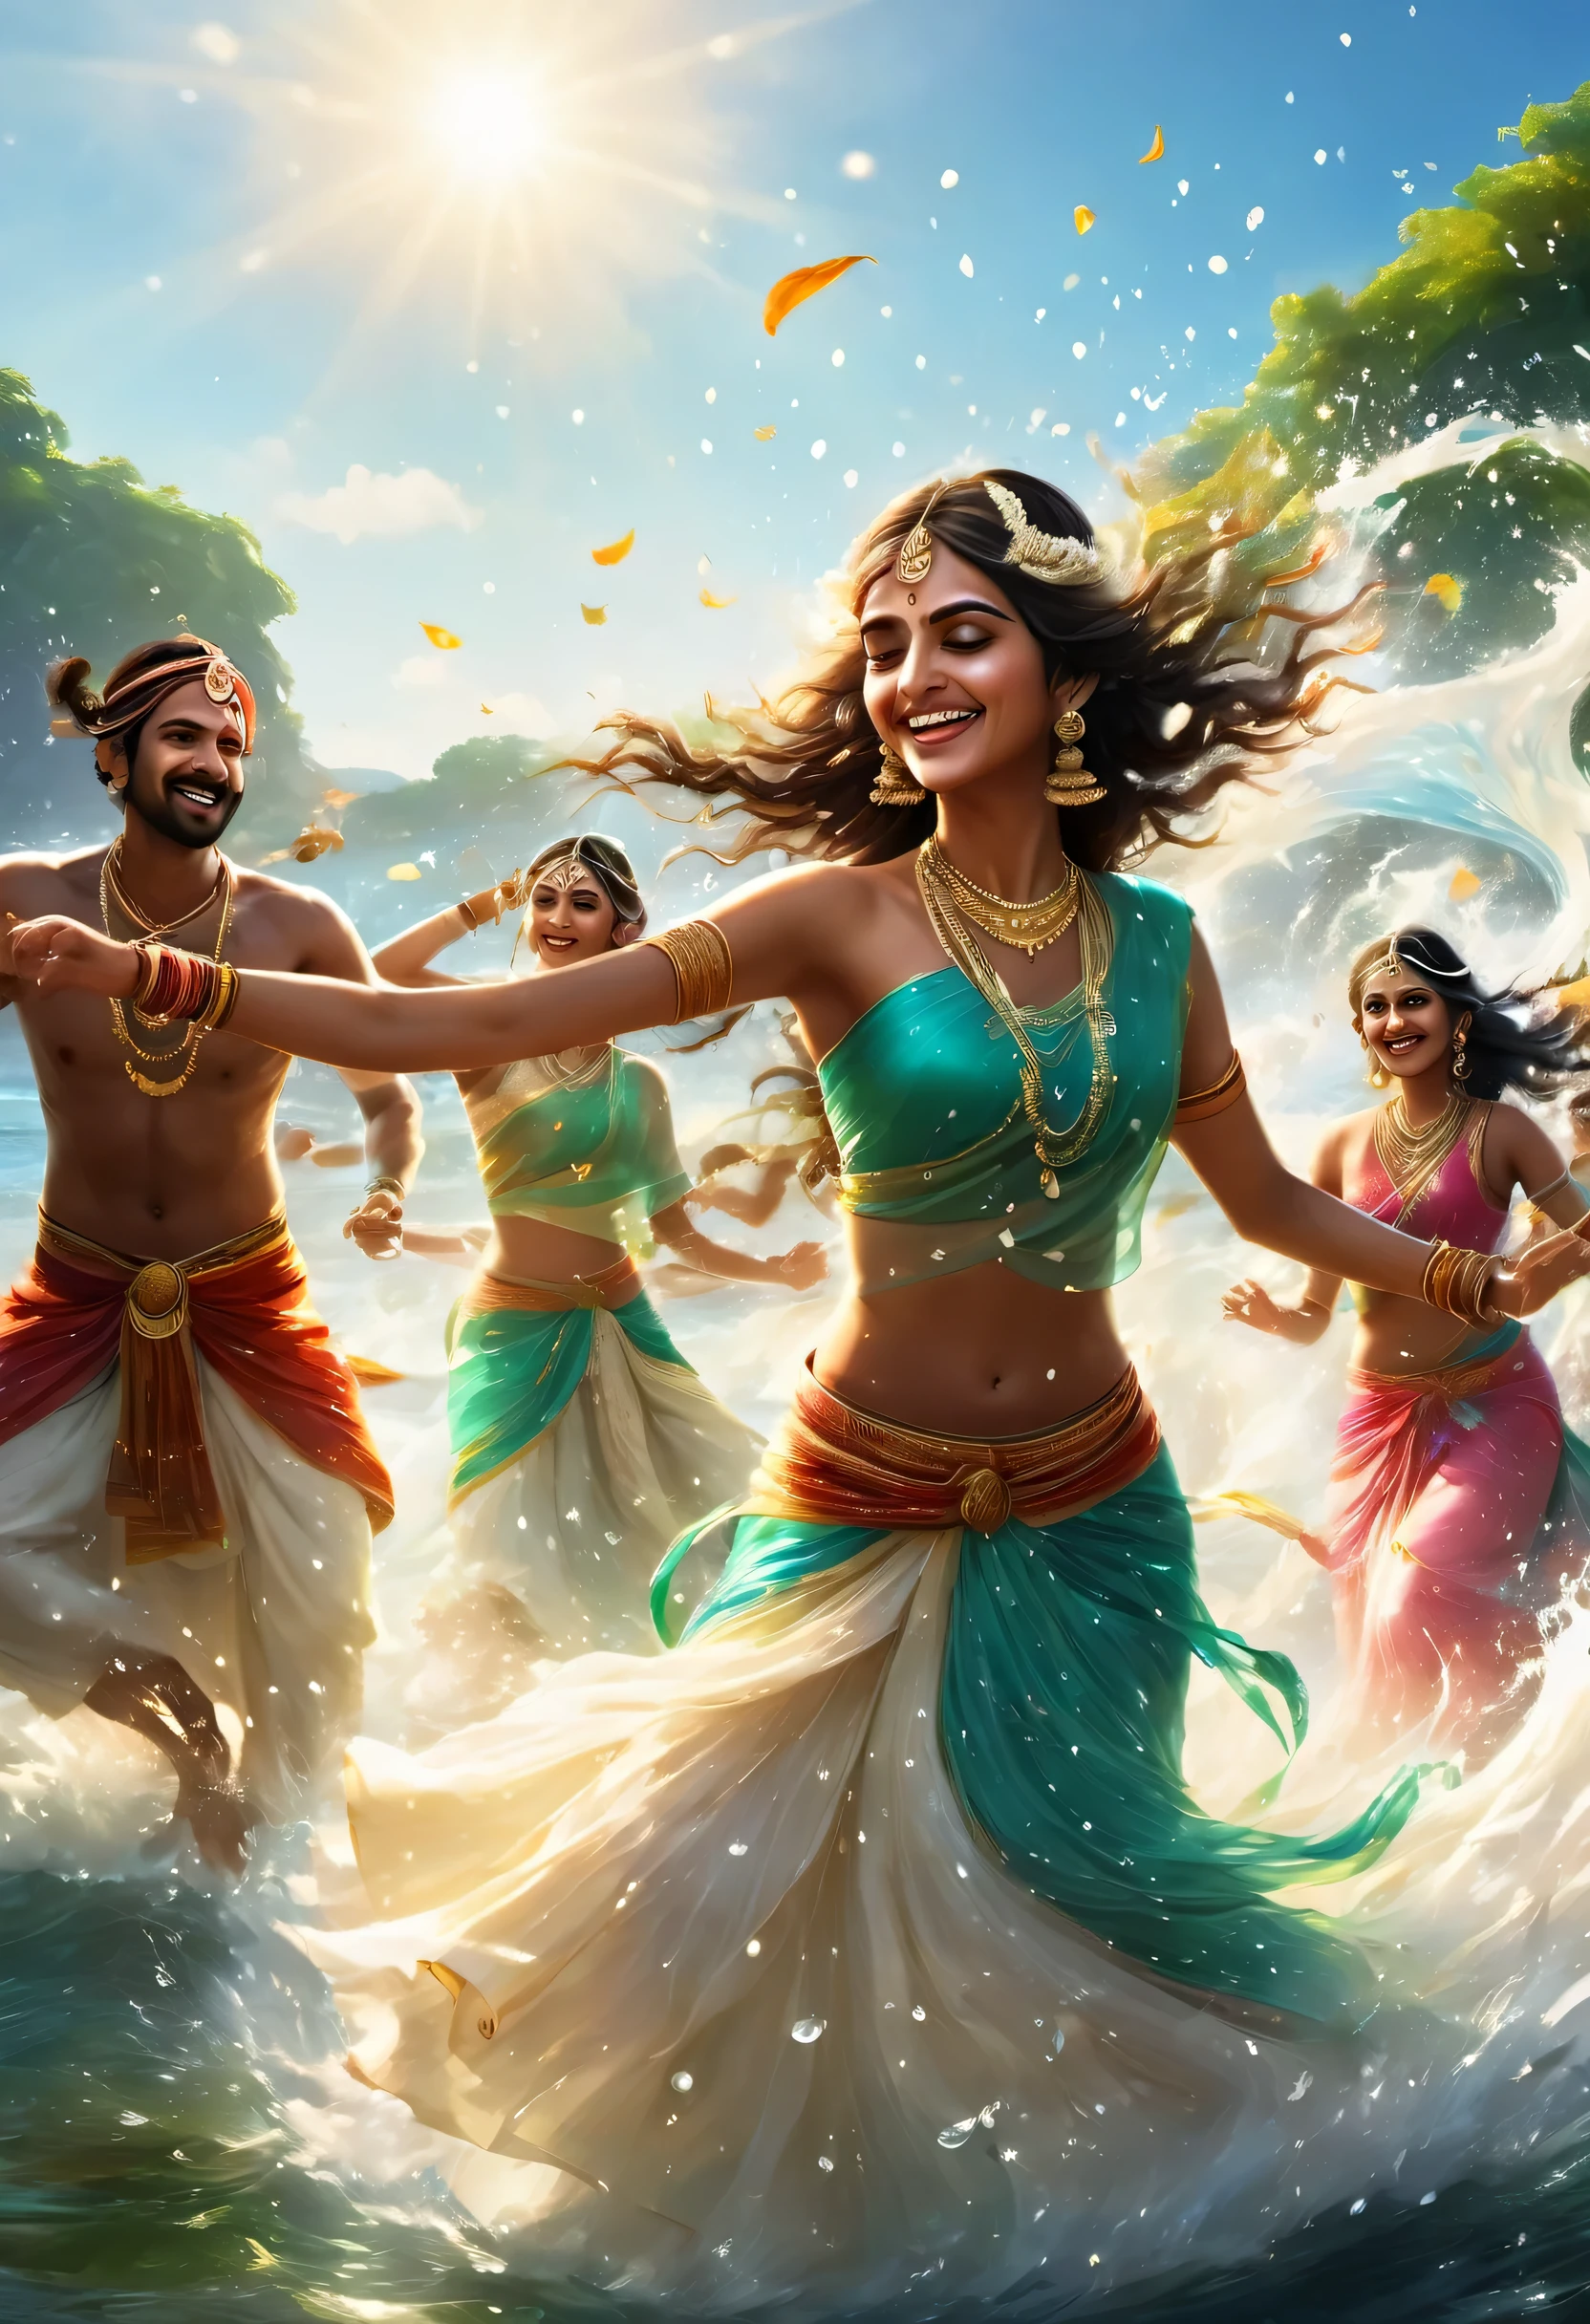 踊るиндийский:100 человек,стиль индийского кино,морской фон,танцевать на мелководье,брызги воды,танцующие капли воды,Похоже, очень весело,Пейзаж, в котором почти слышно музыку,Почувствуй ритм,улыбка,индийский,Танцуйте вместе,счастливый,рендеринг,нереальный двигатель,красивый свет и тень,Фотореалистичный,реалистичная текстура,вспышка,Разрешите&#39;Танцуйте вместе,супер захватывающая сцена,сложные детали